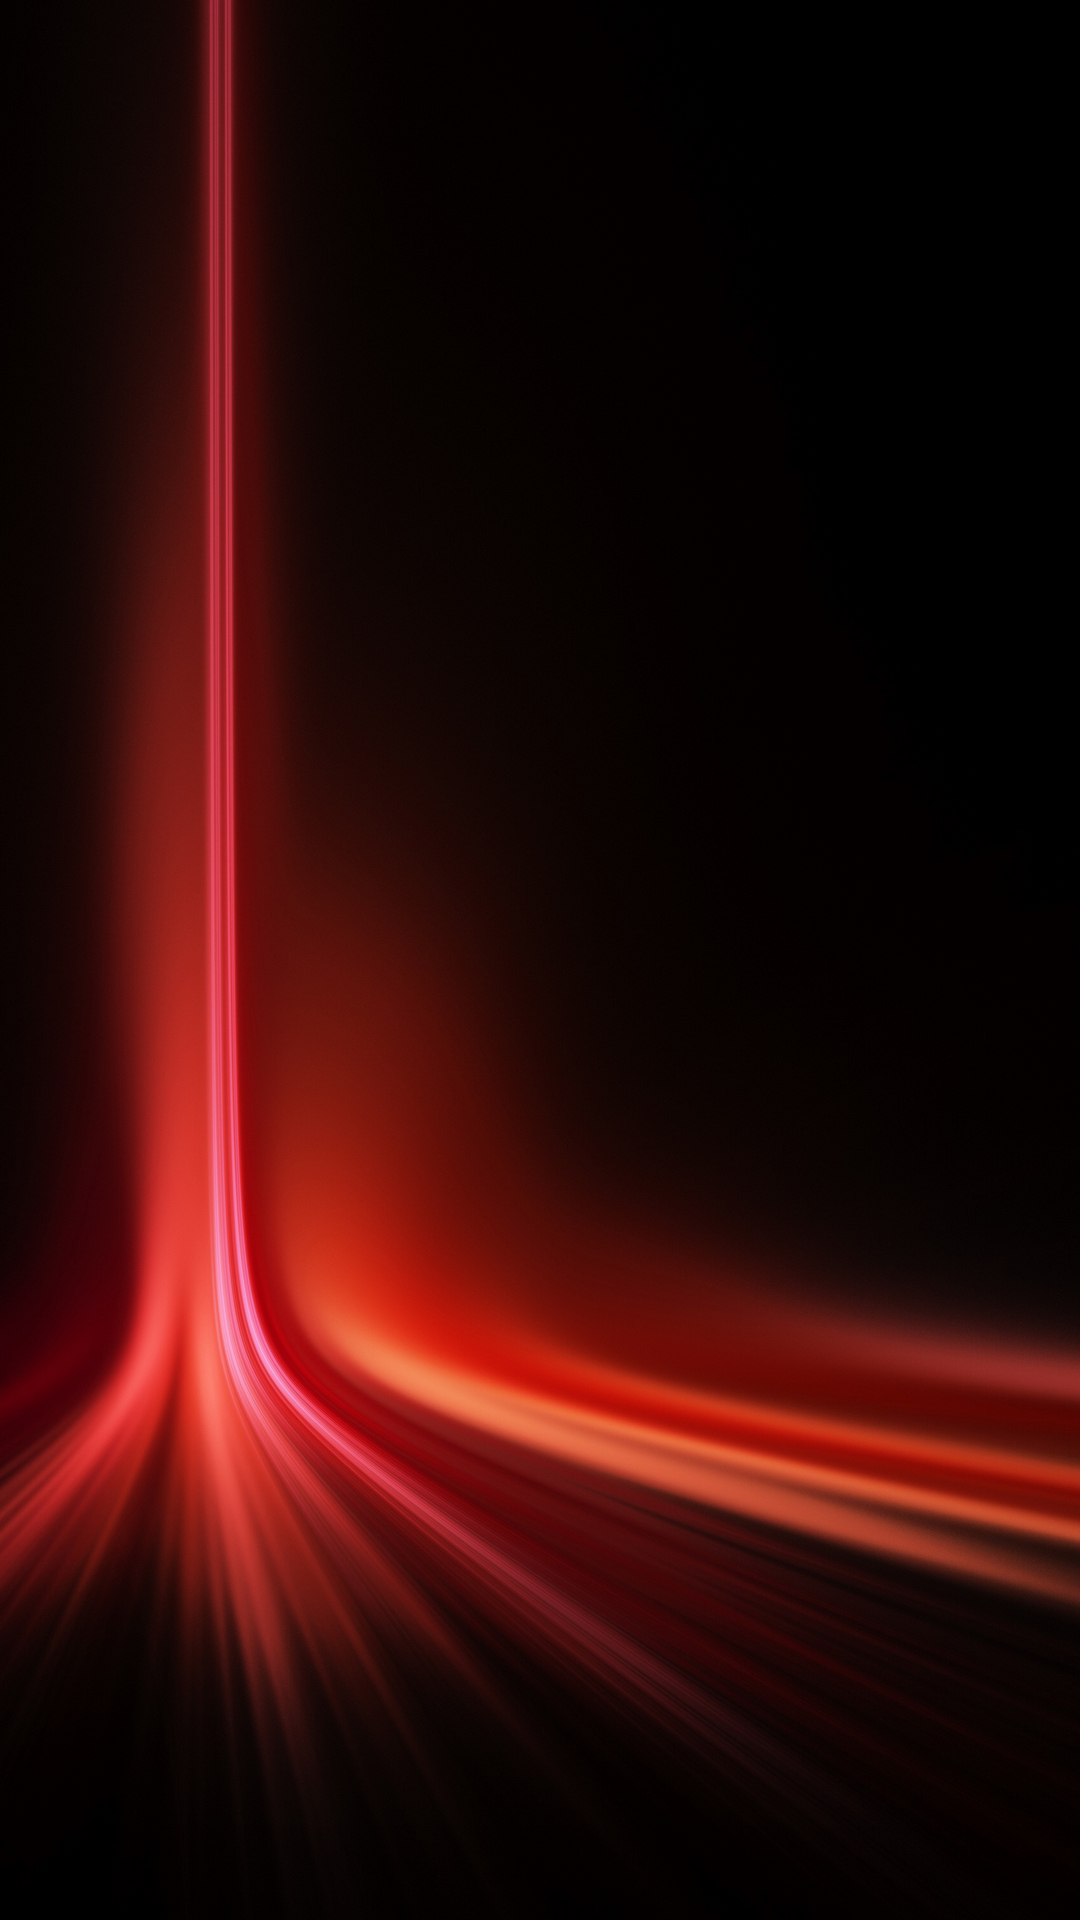 Vertical Red Laser Light Spread iPhone 6 Plus HD Wallpaper